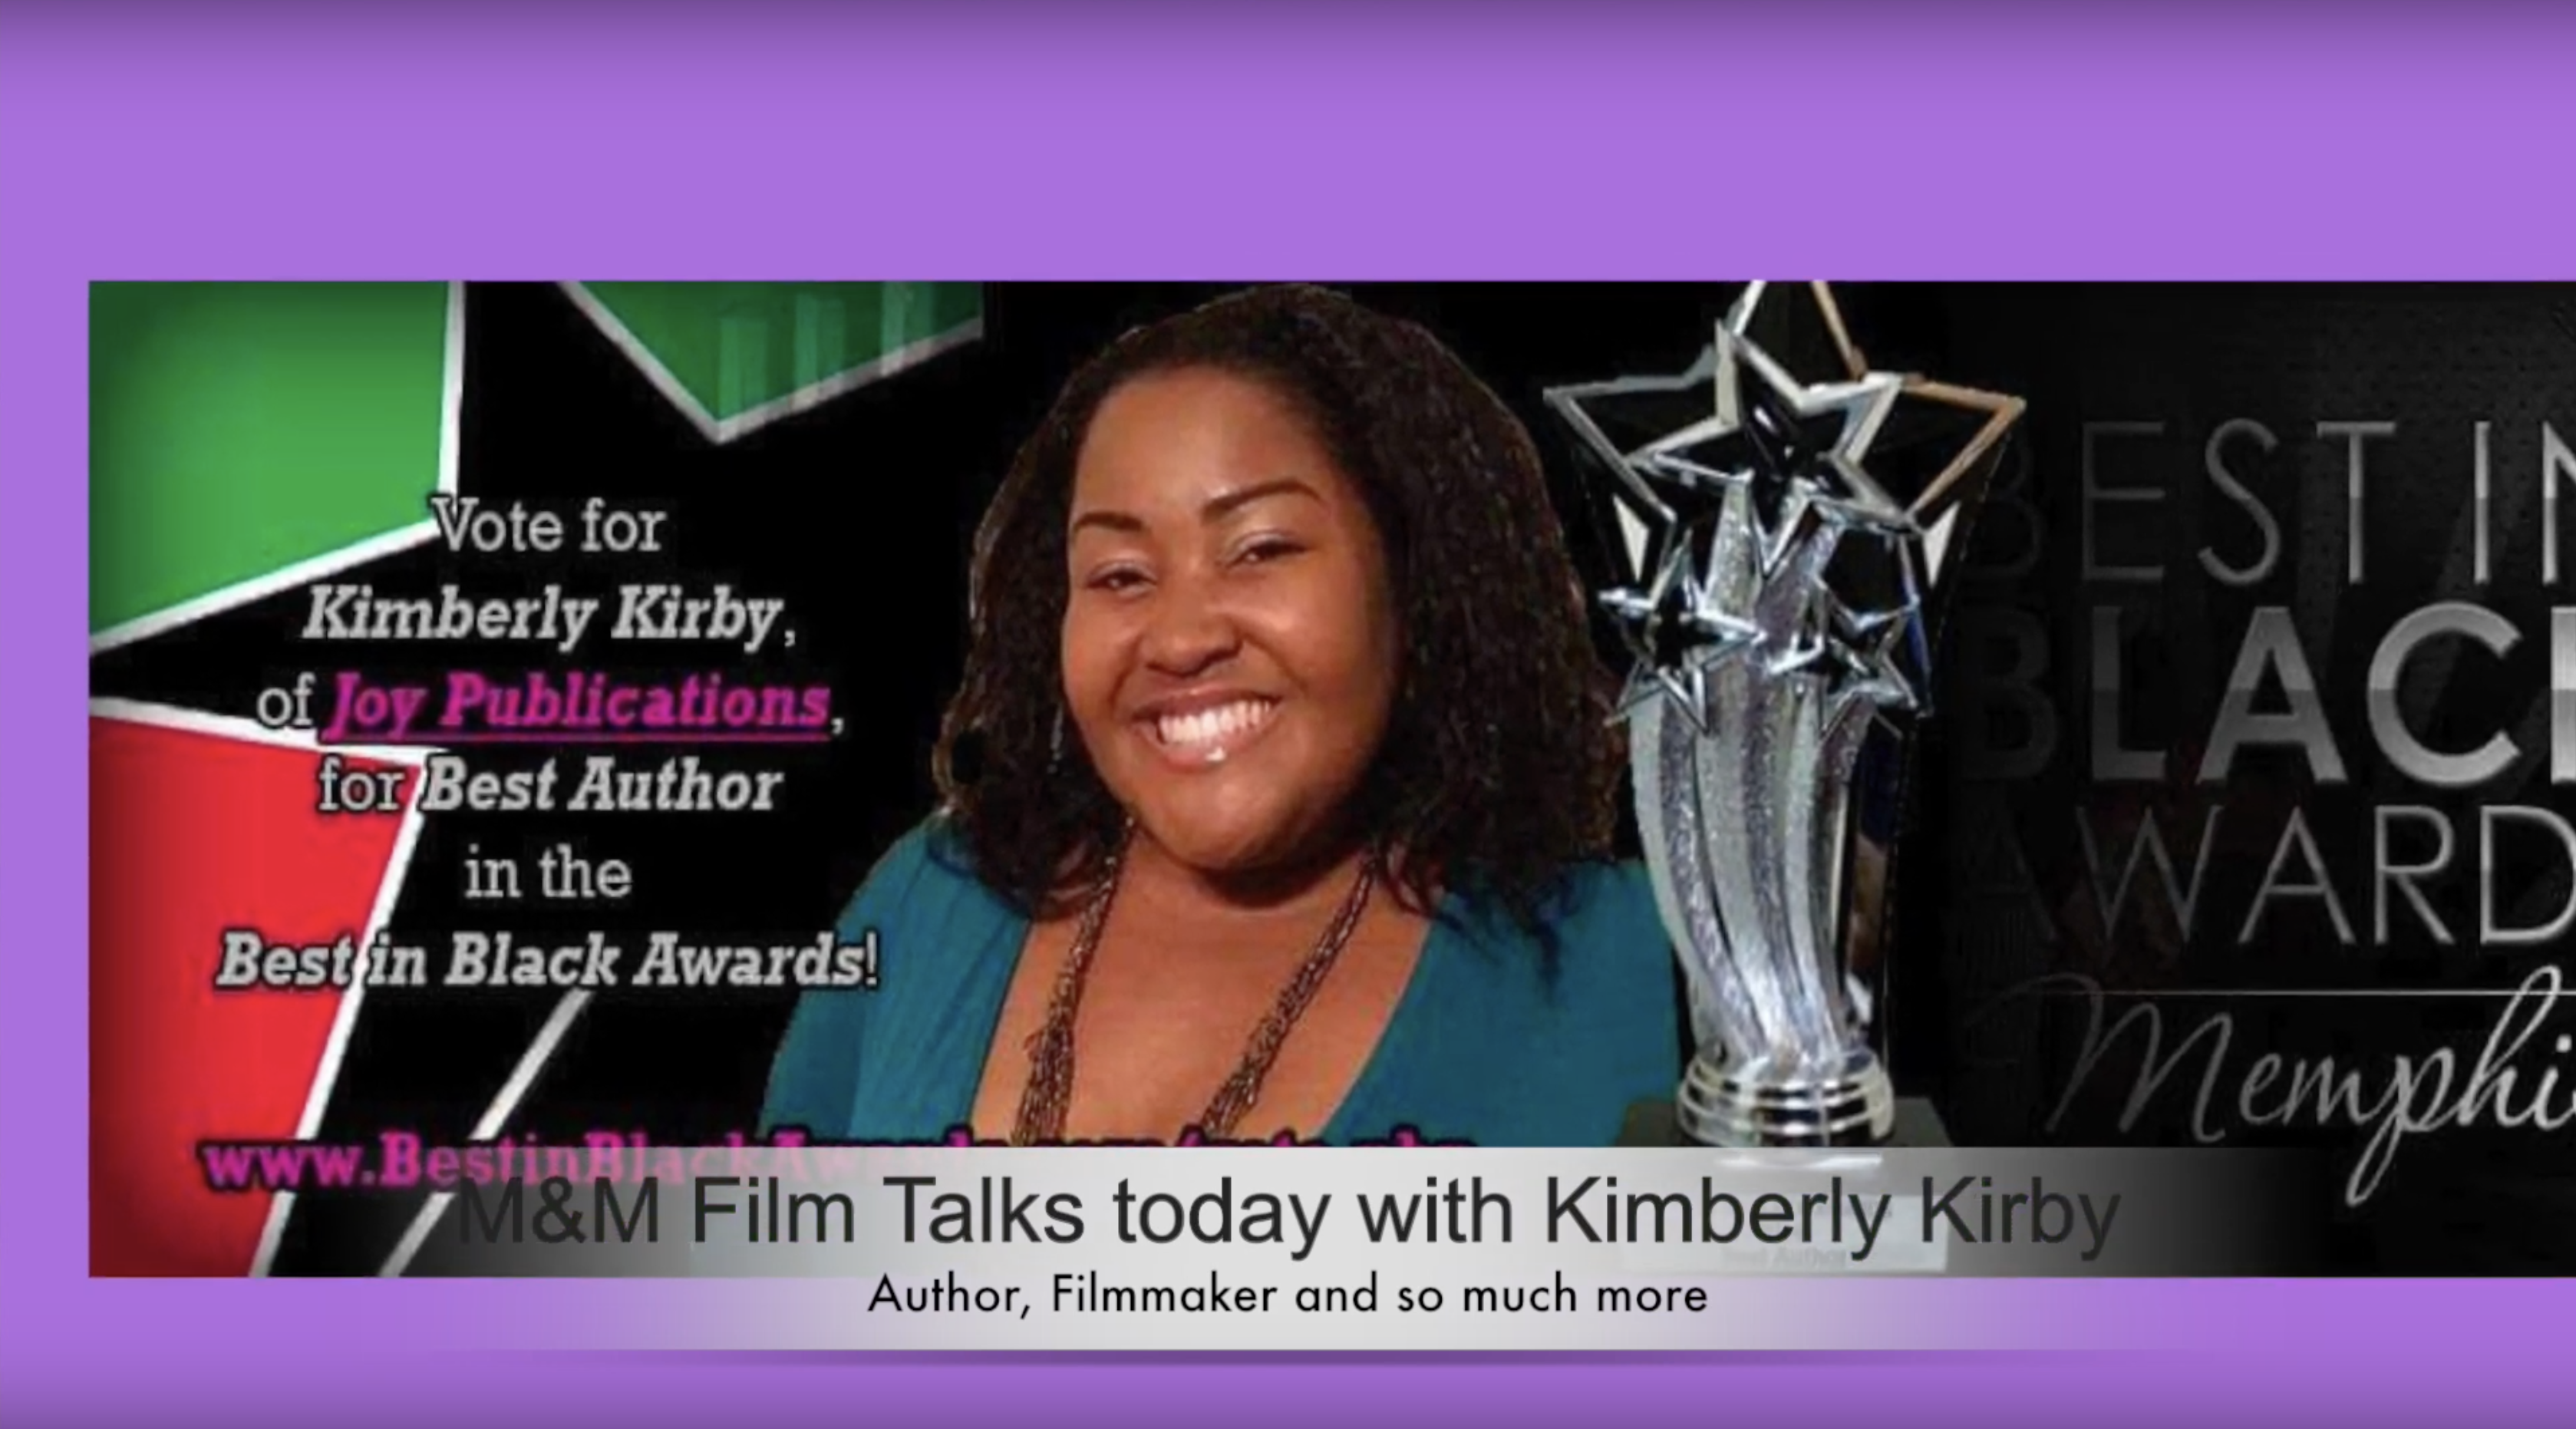 M&M Film Talks with Author Kimberly Kirby